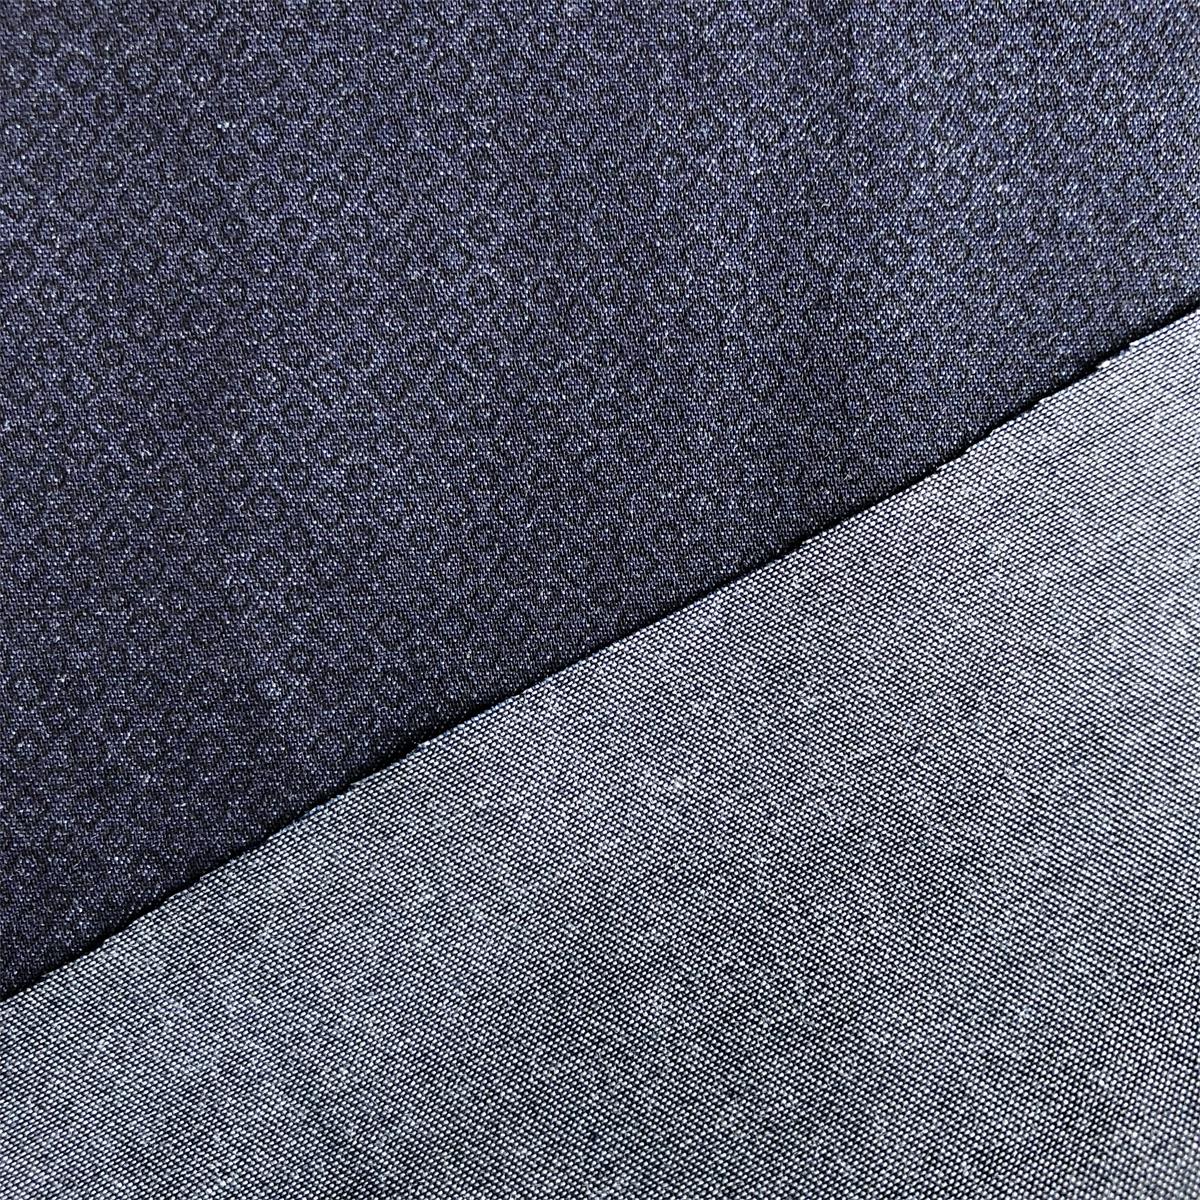 Denim Fabric by indigo yarn for men's casual shirts 100% cotton twill denim printed light blue background shirts woven fabric